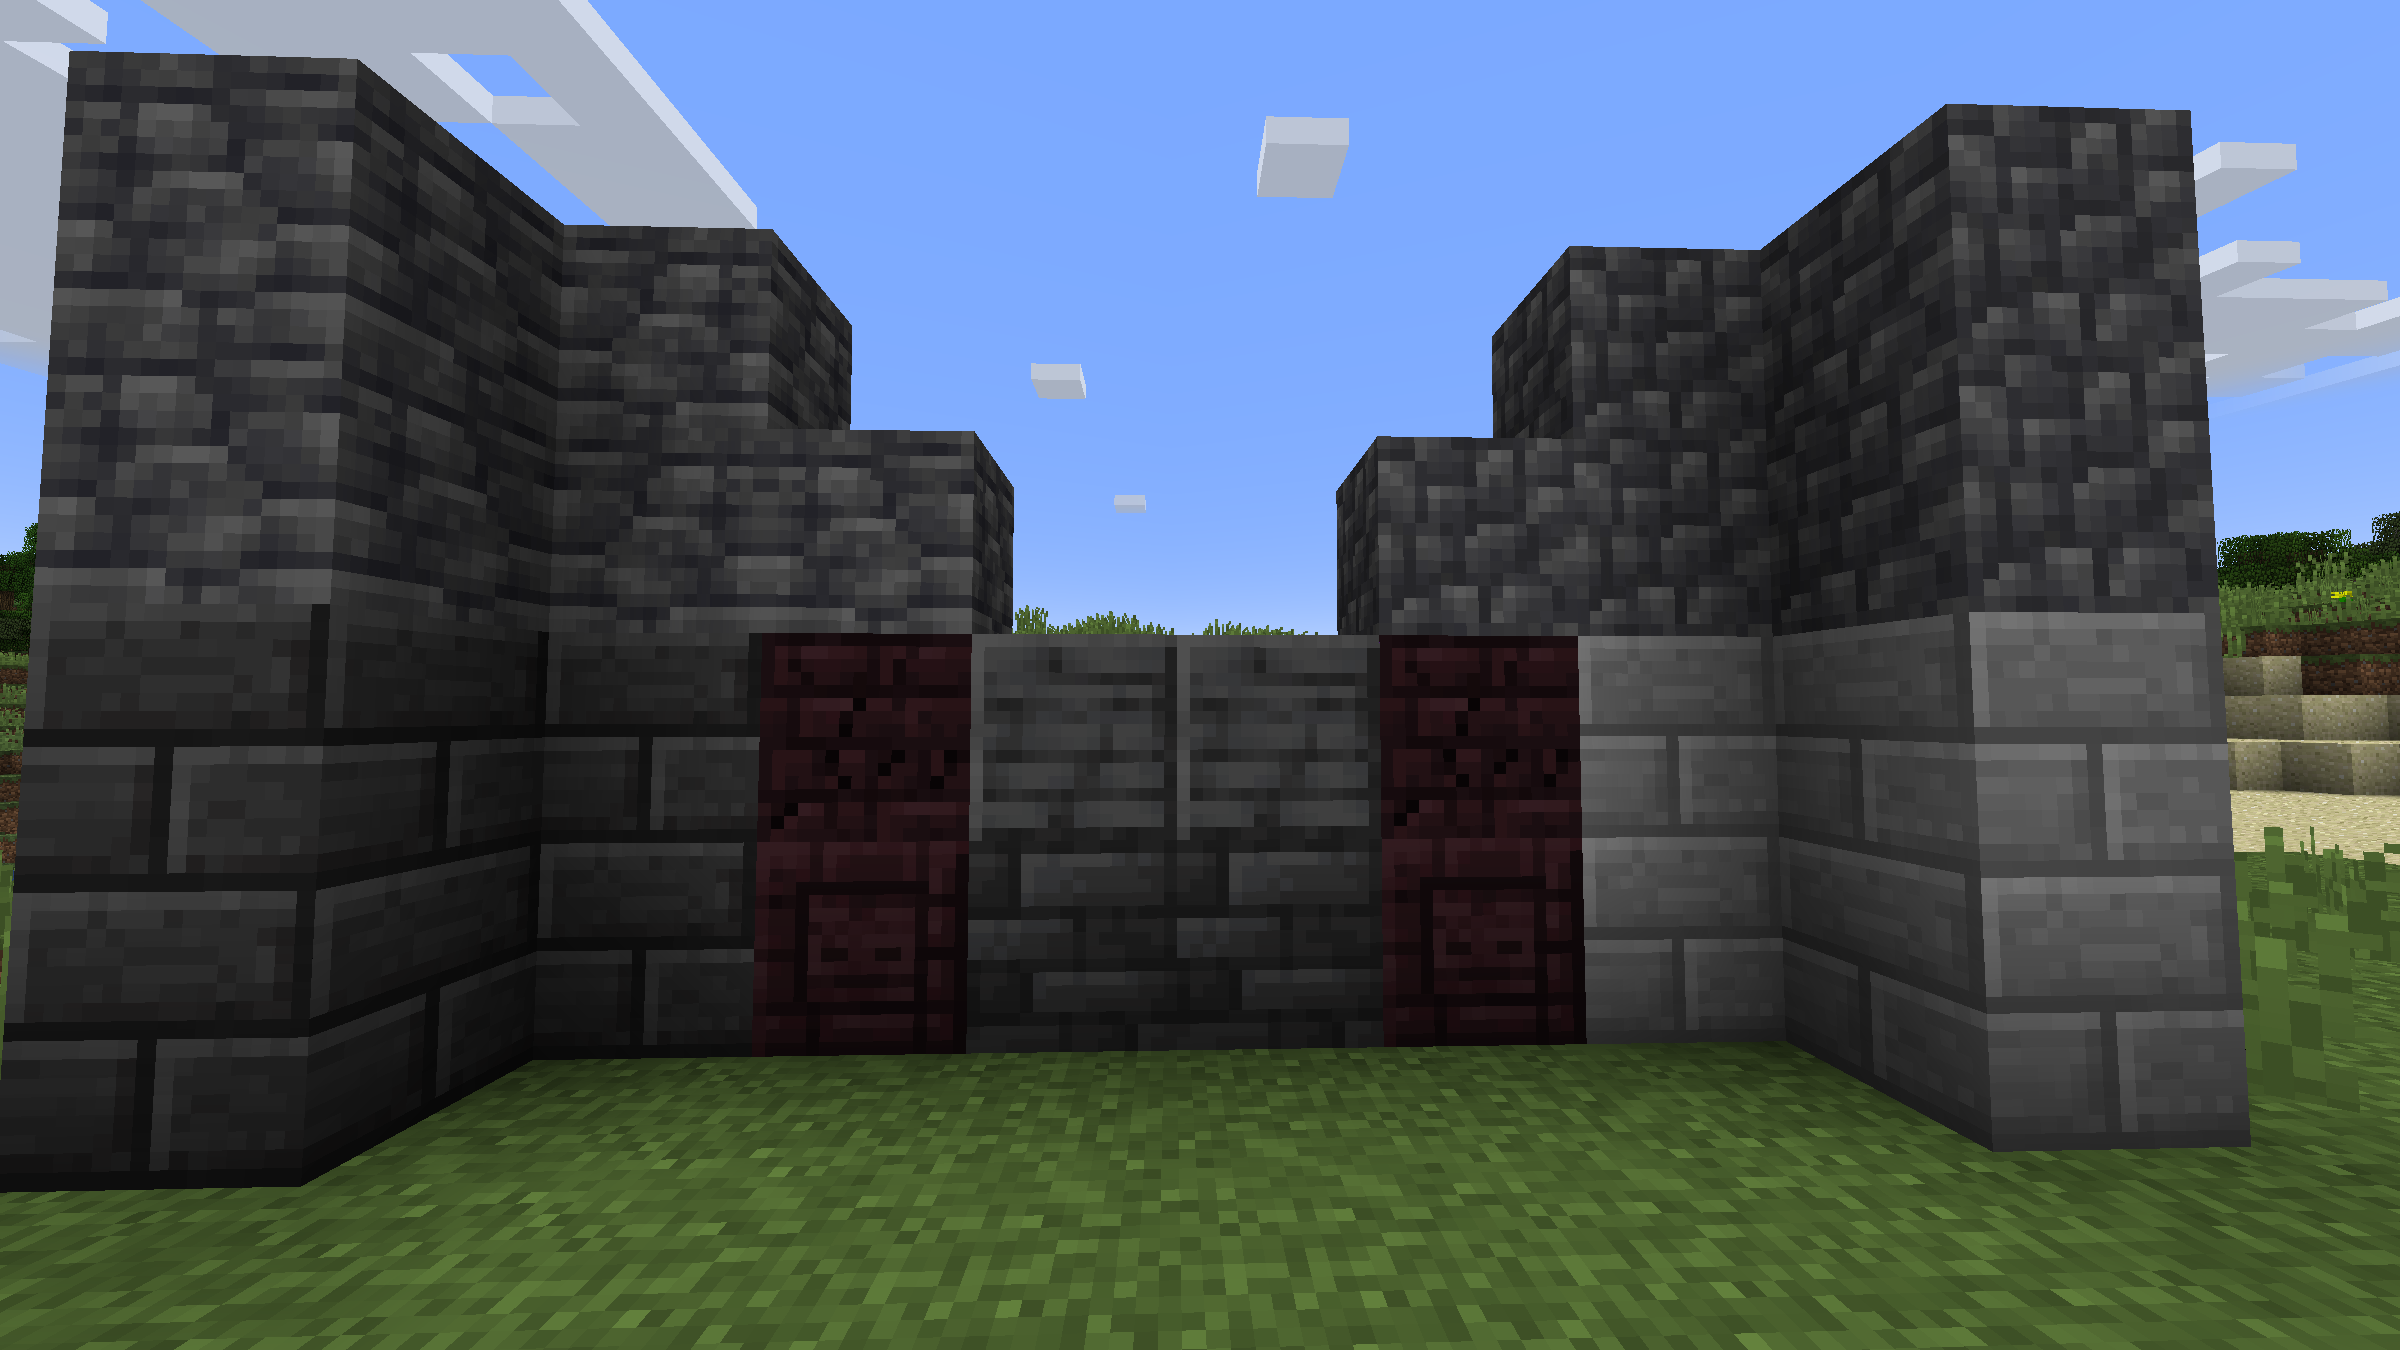 Building blocks!